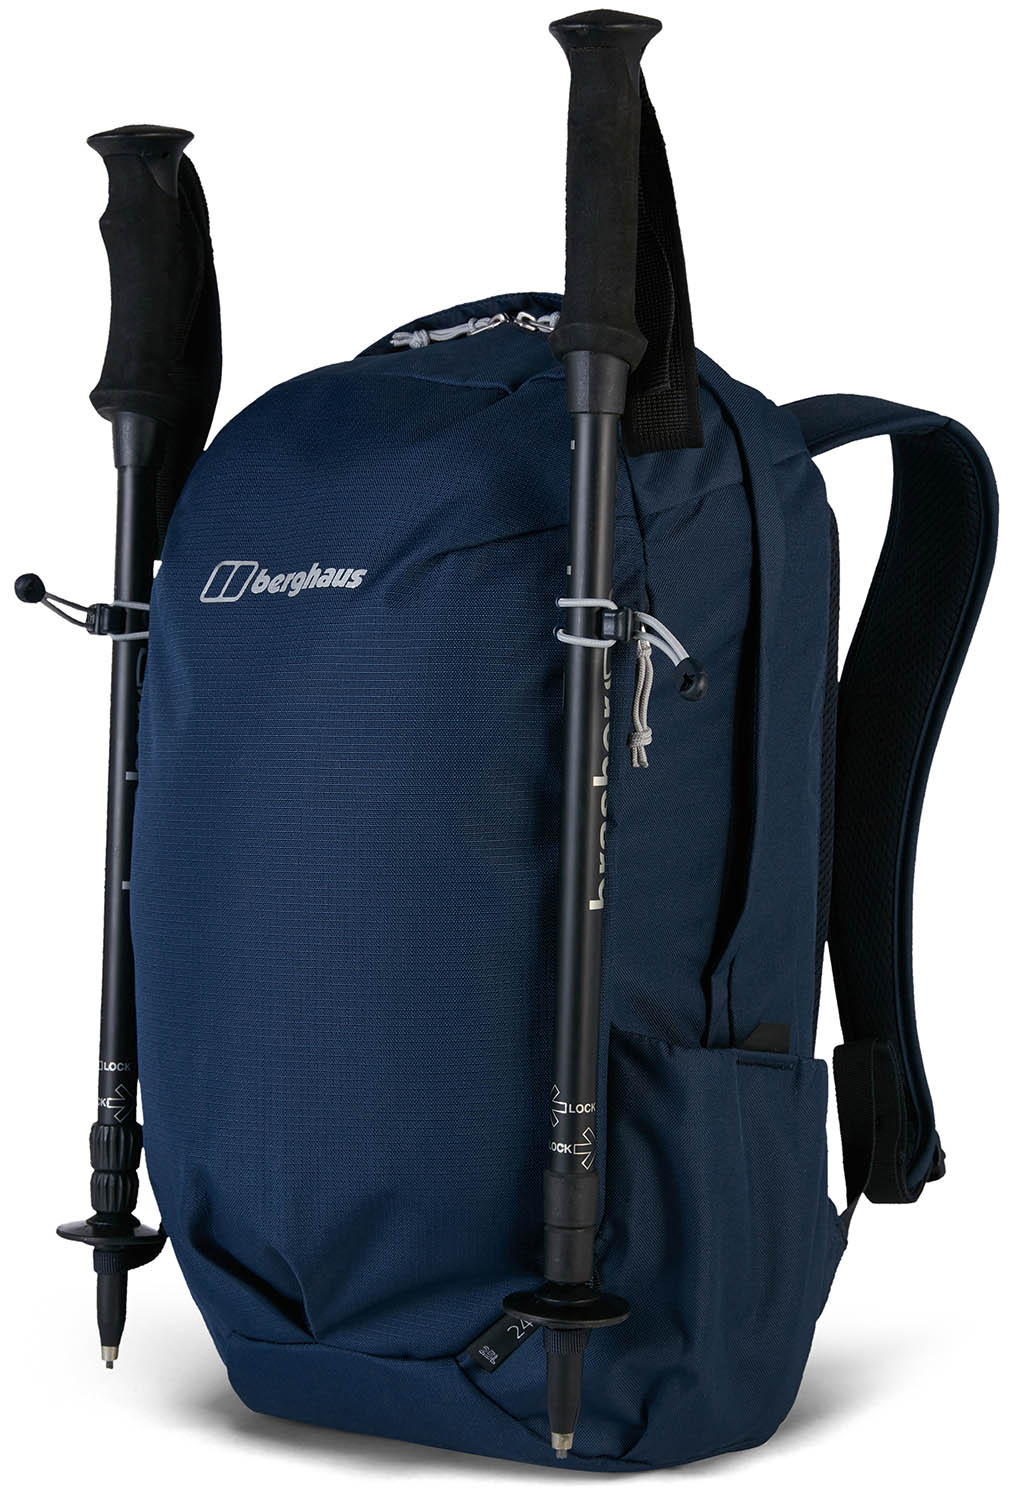 Berghaus 24/7 25 Backpack - Dark Blue